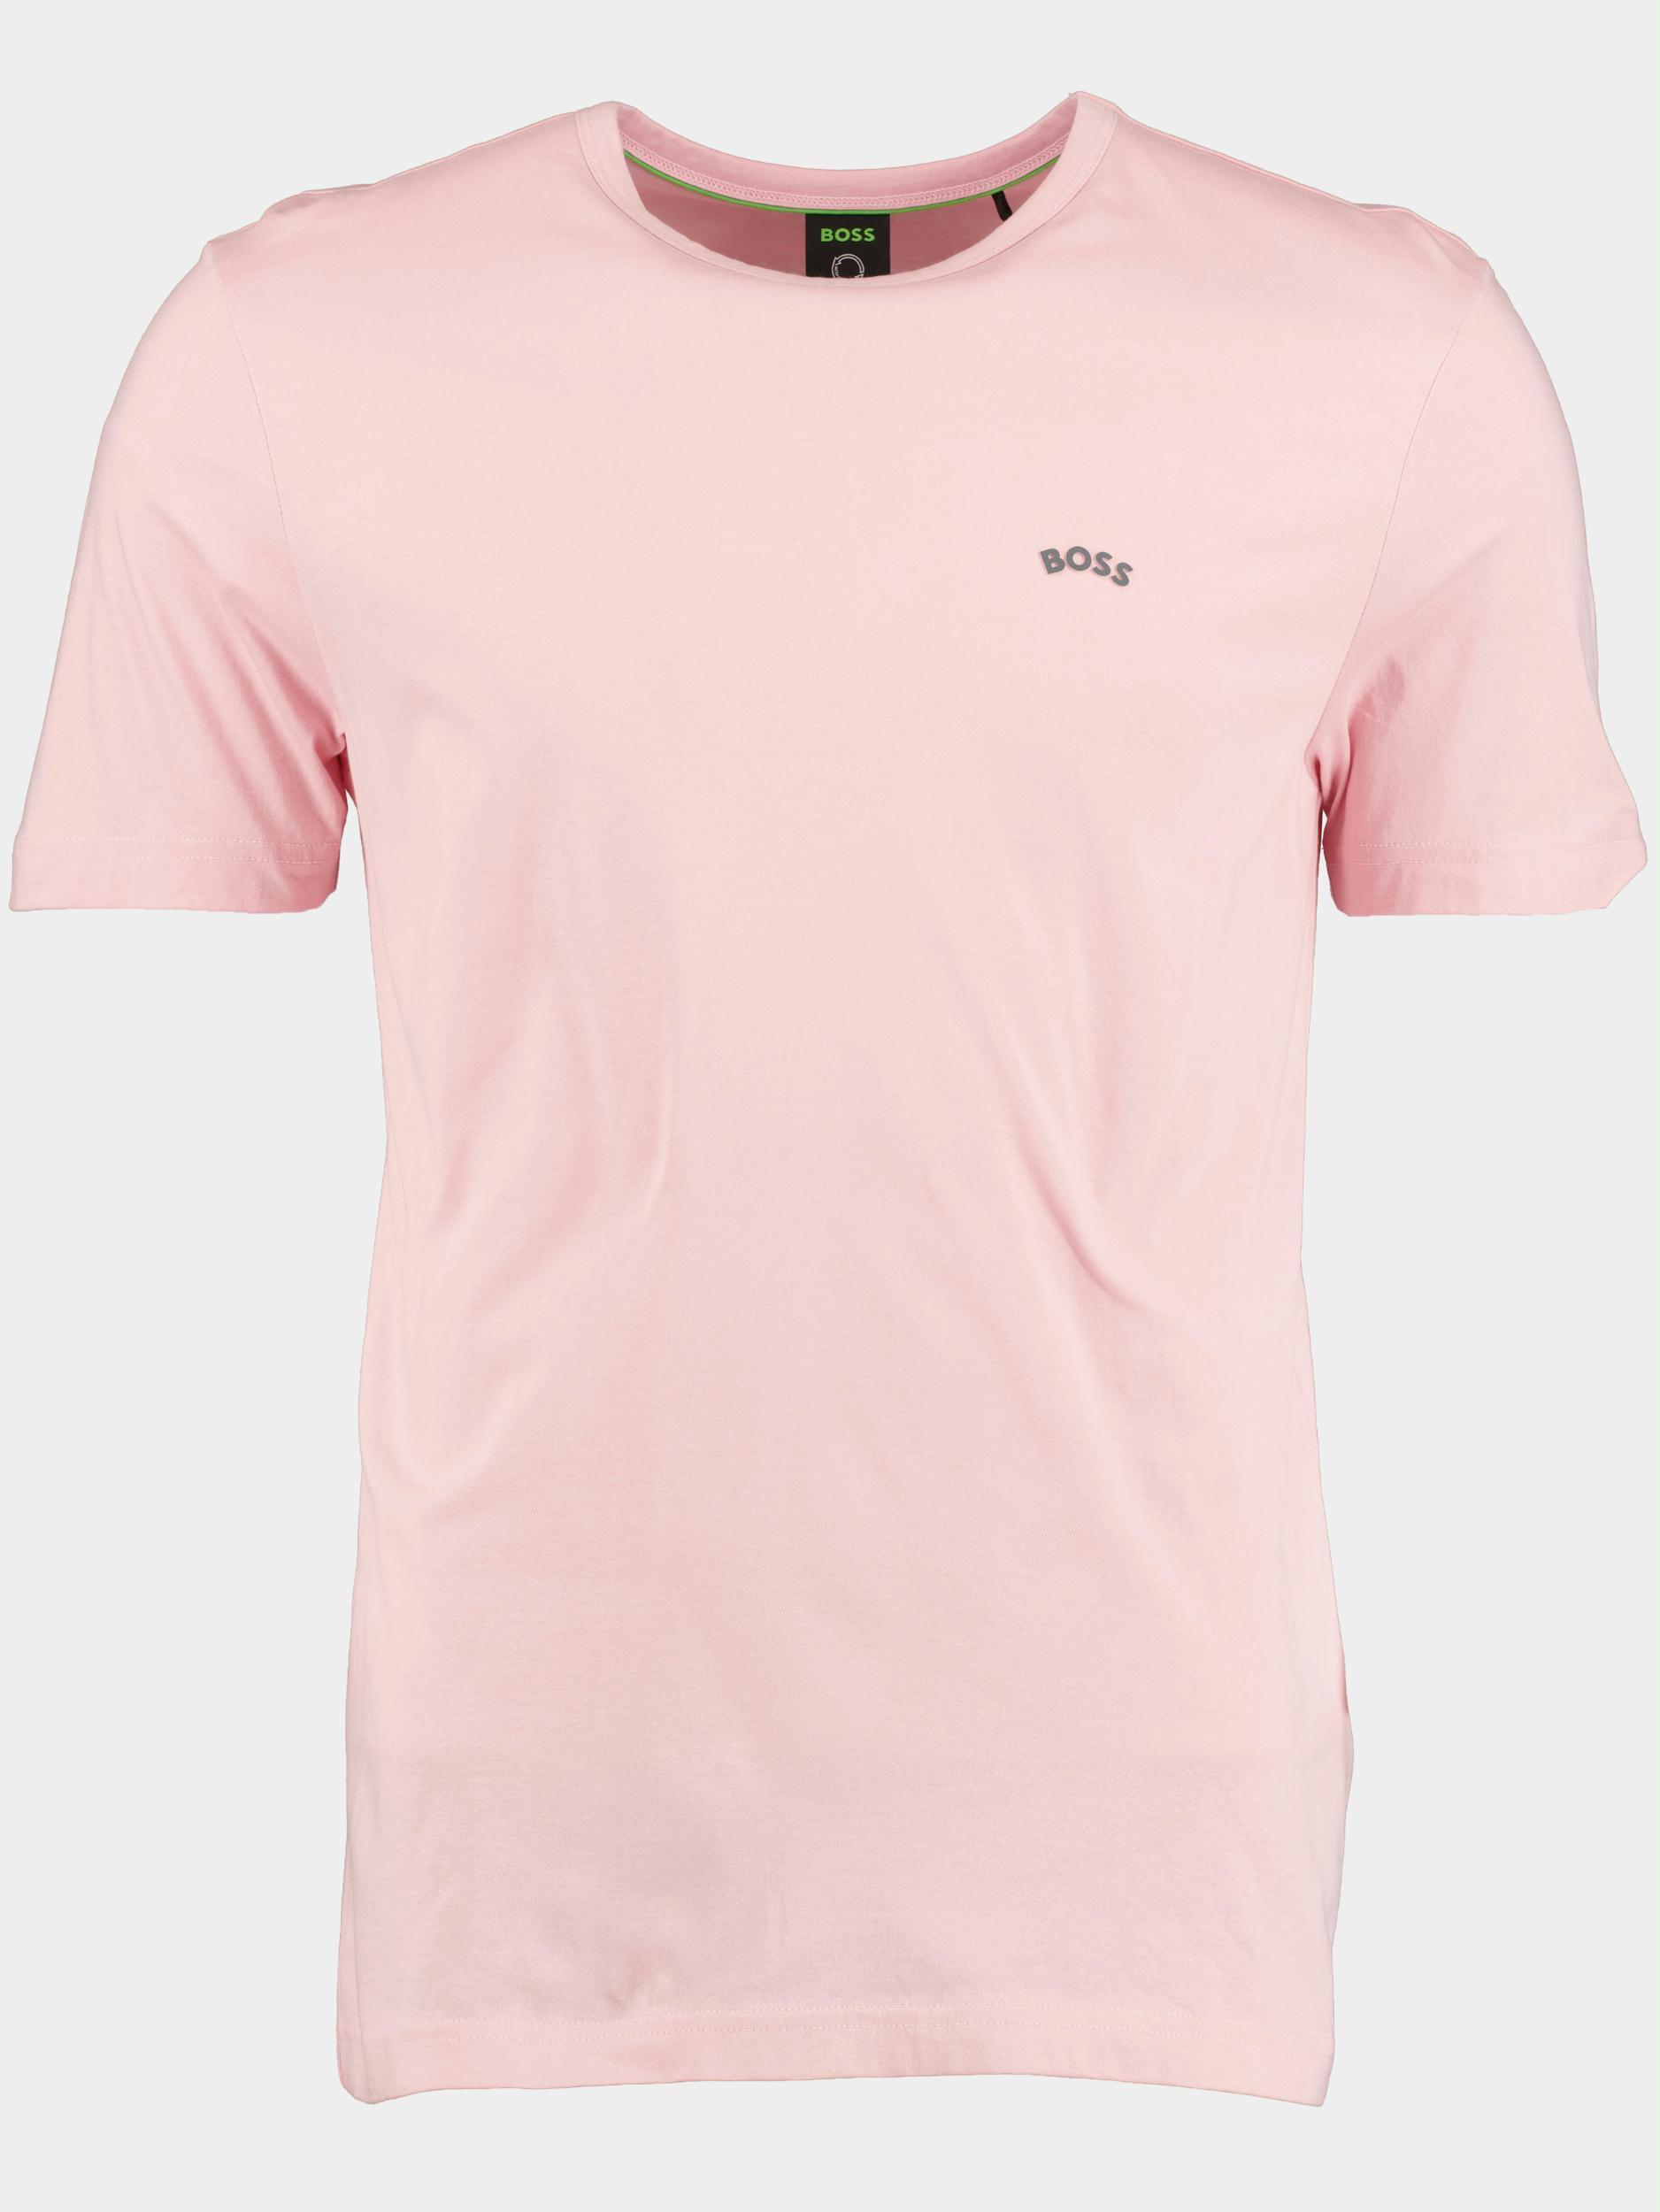 BOSS Green T-shirt korte mouw Roze Tee Curved 10241647 01 50469062/683